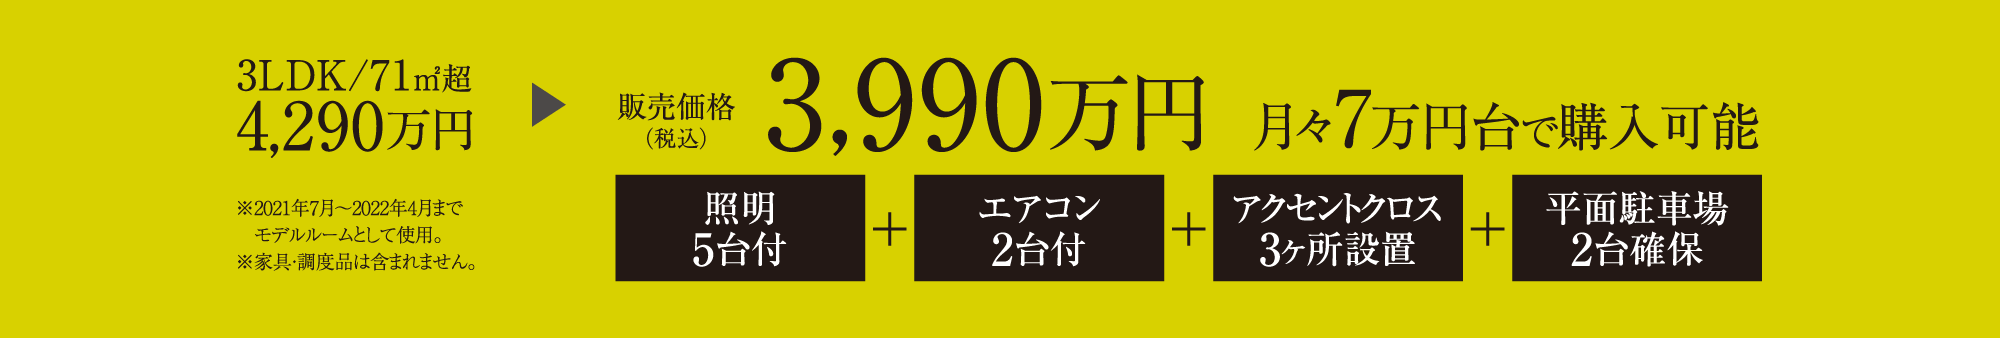 4290万円→3990万円